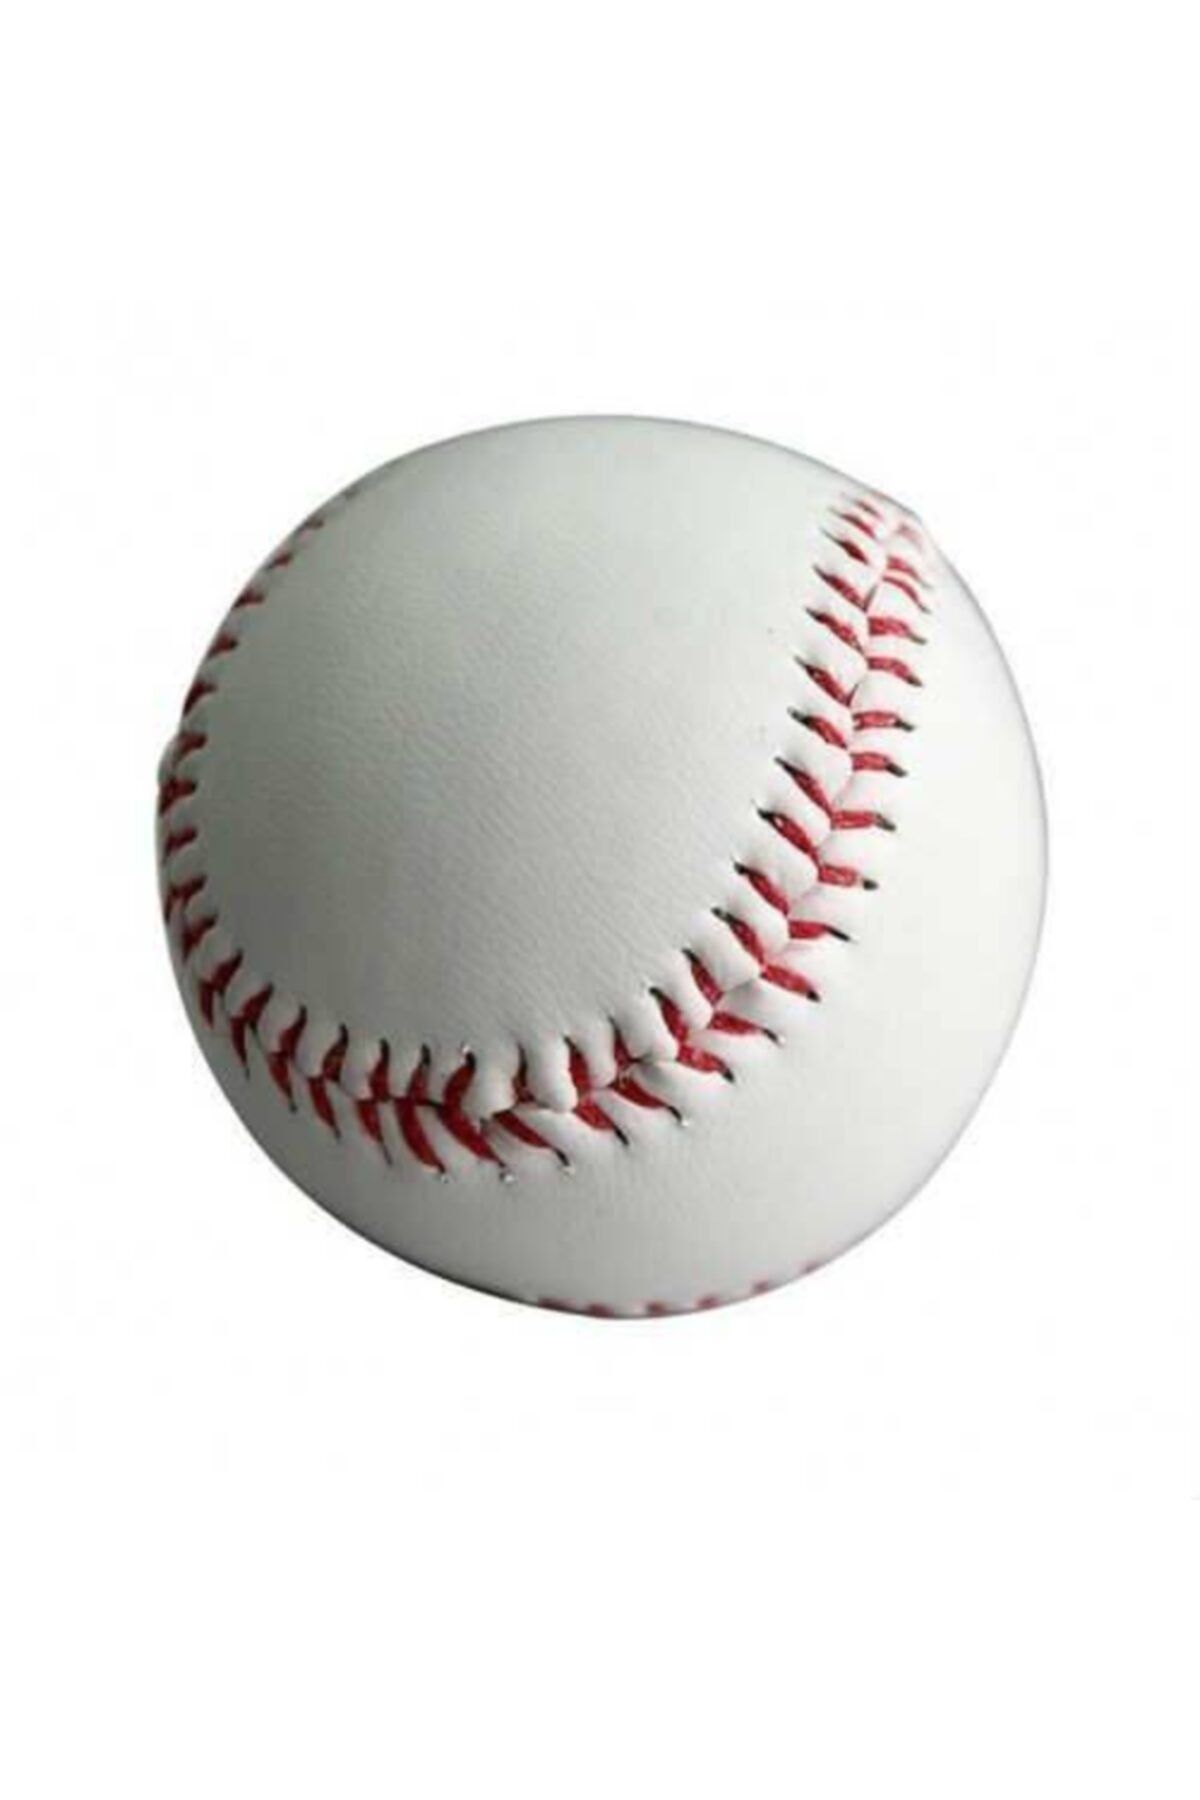 Baseball ball. Бейсбольный мяч. Мяч для бейсбола. Мячи для бейсбола пластиковый. Мячик для Софтбола.